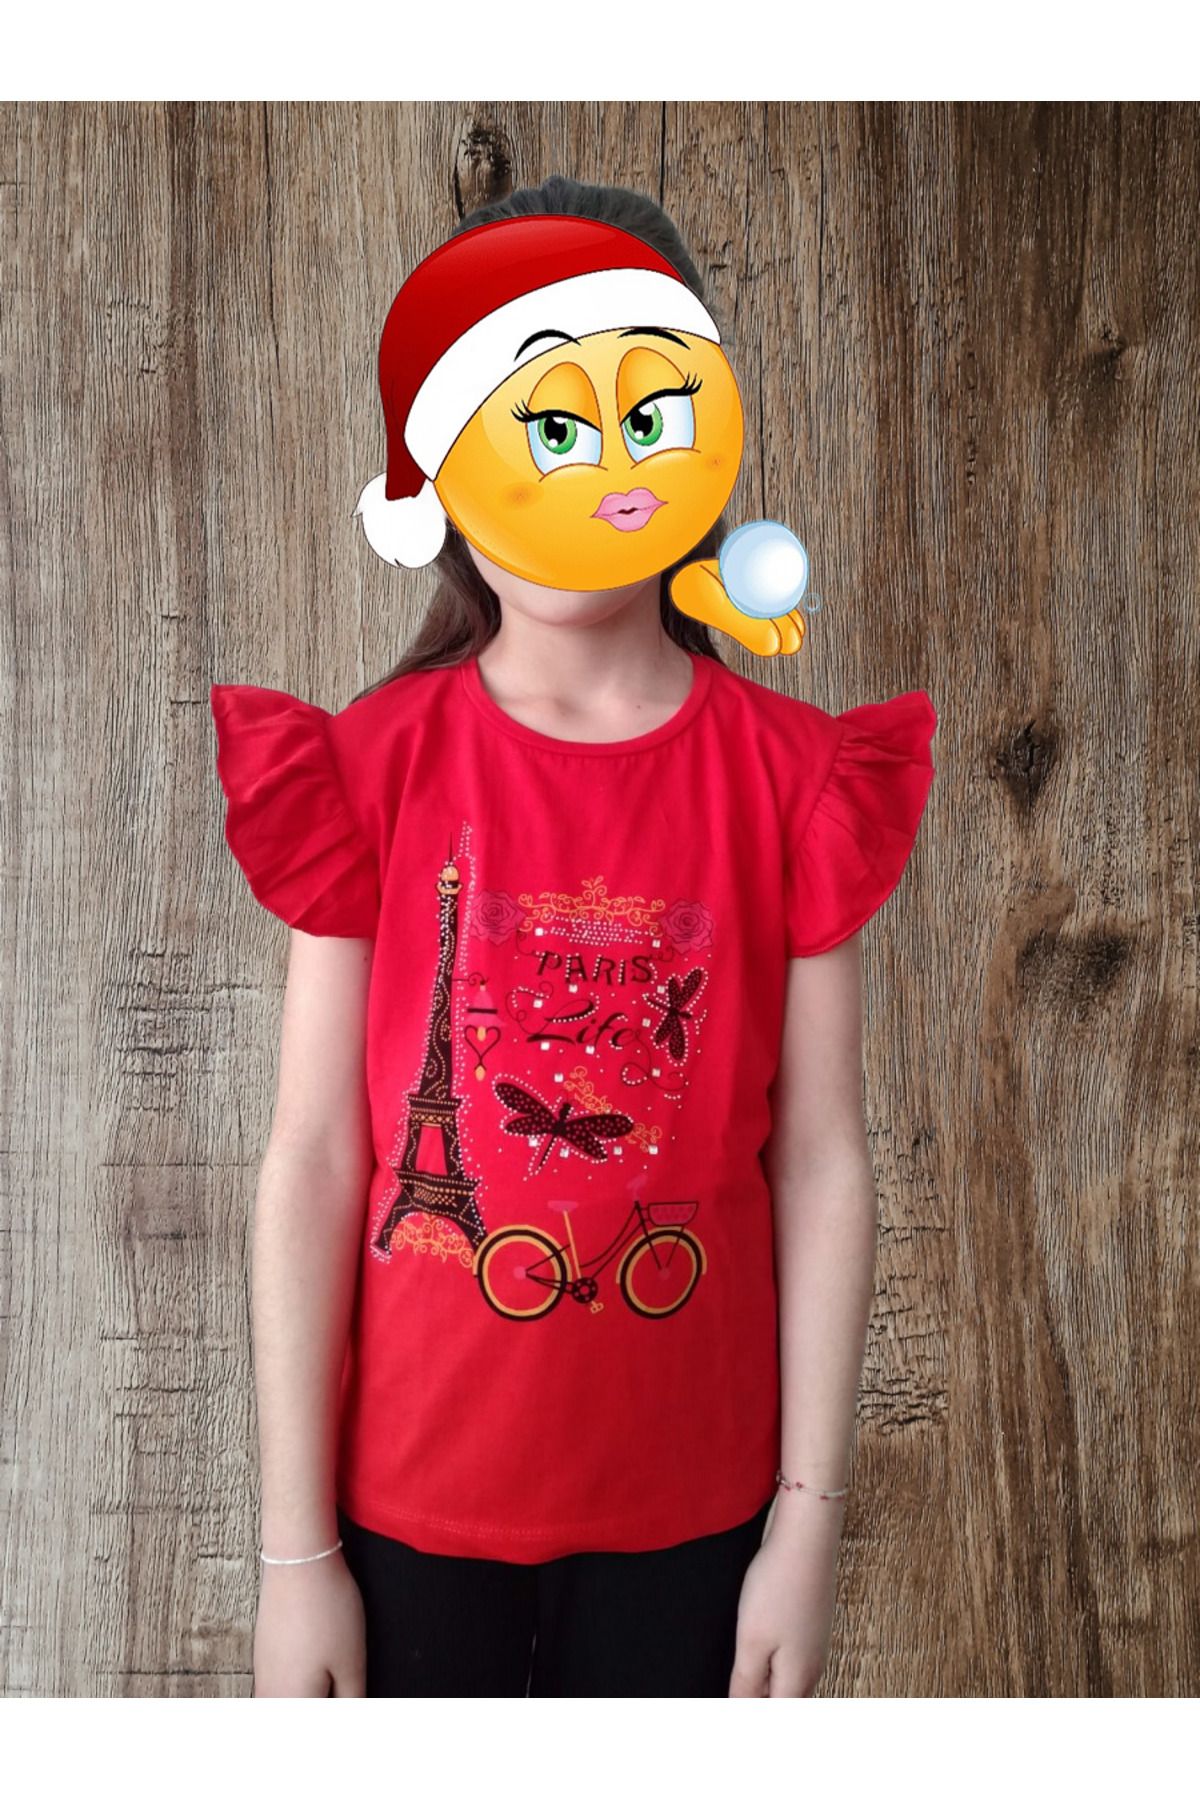 Twix Paris Boncuk Nakışlı 5 yaş - 12 Yaş T-shirt